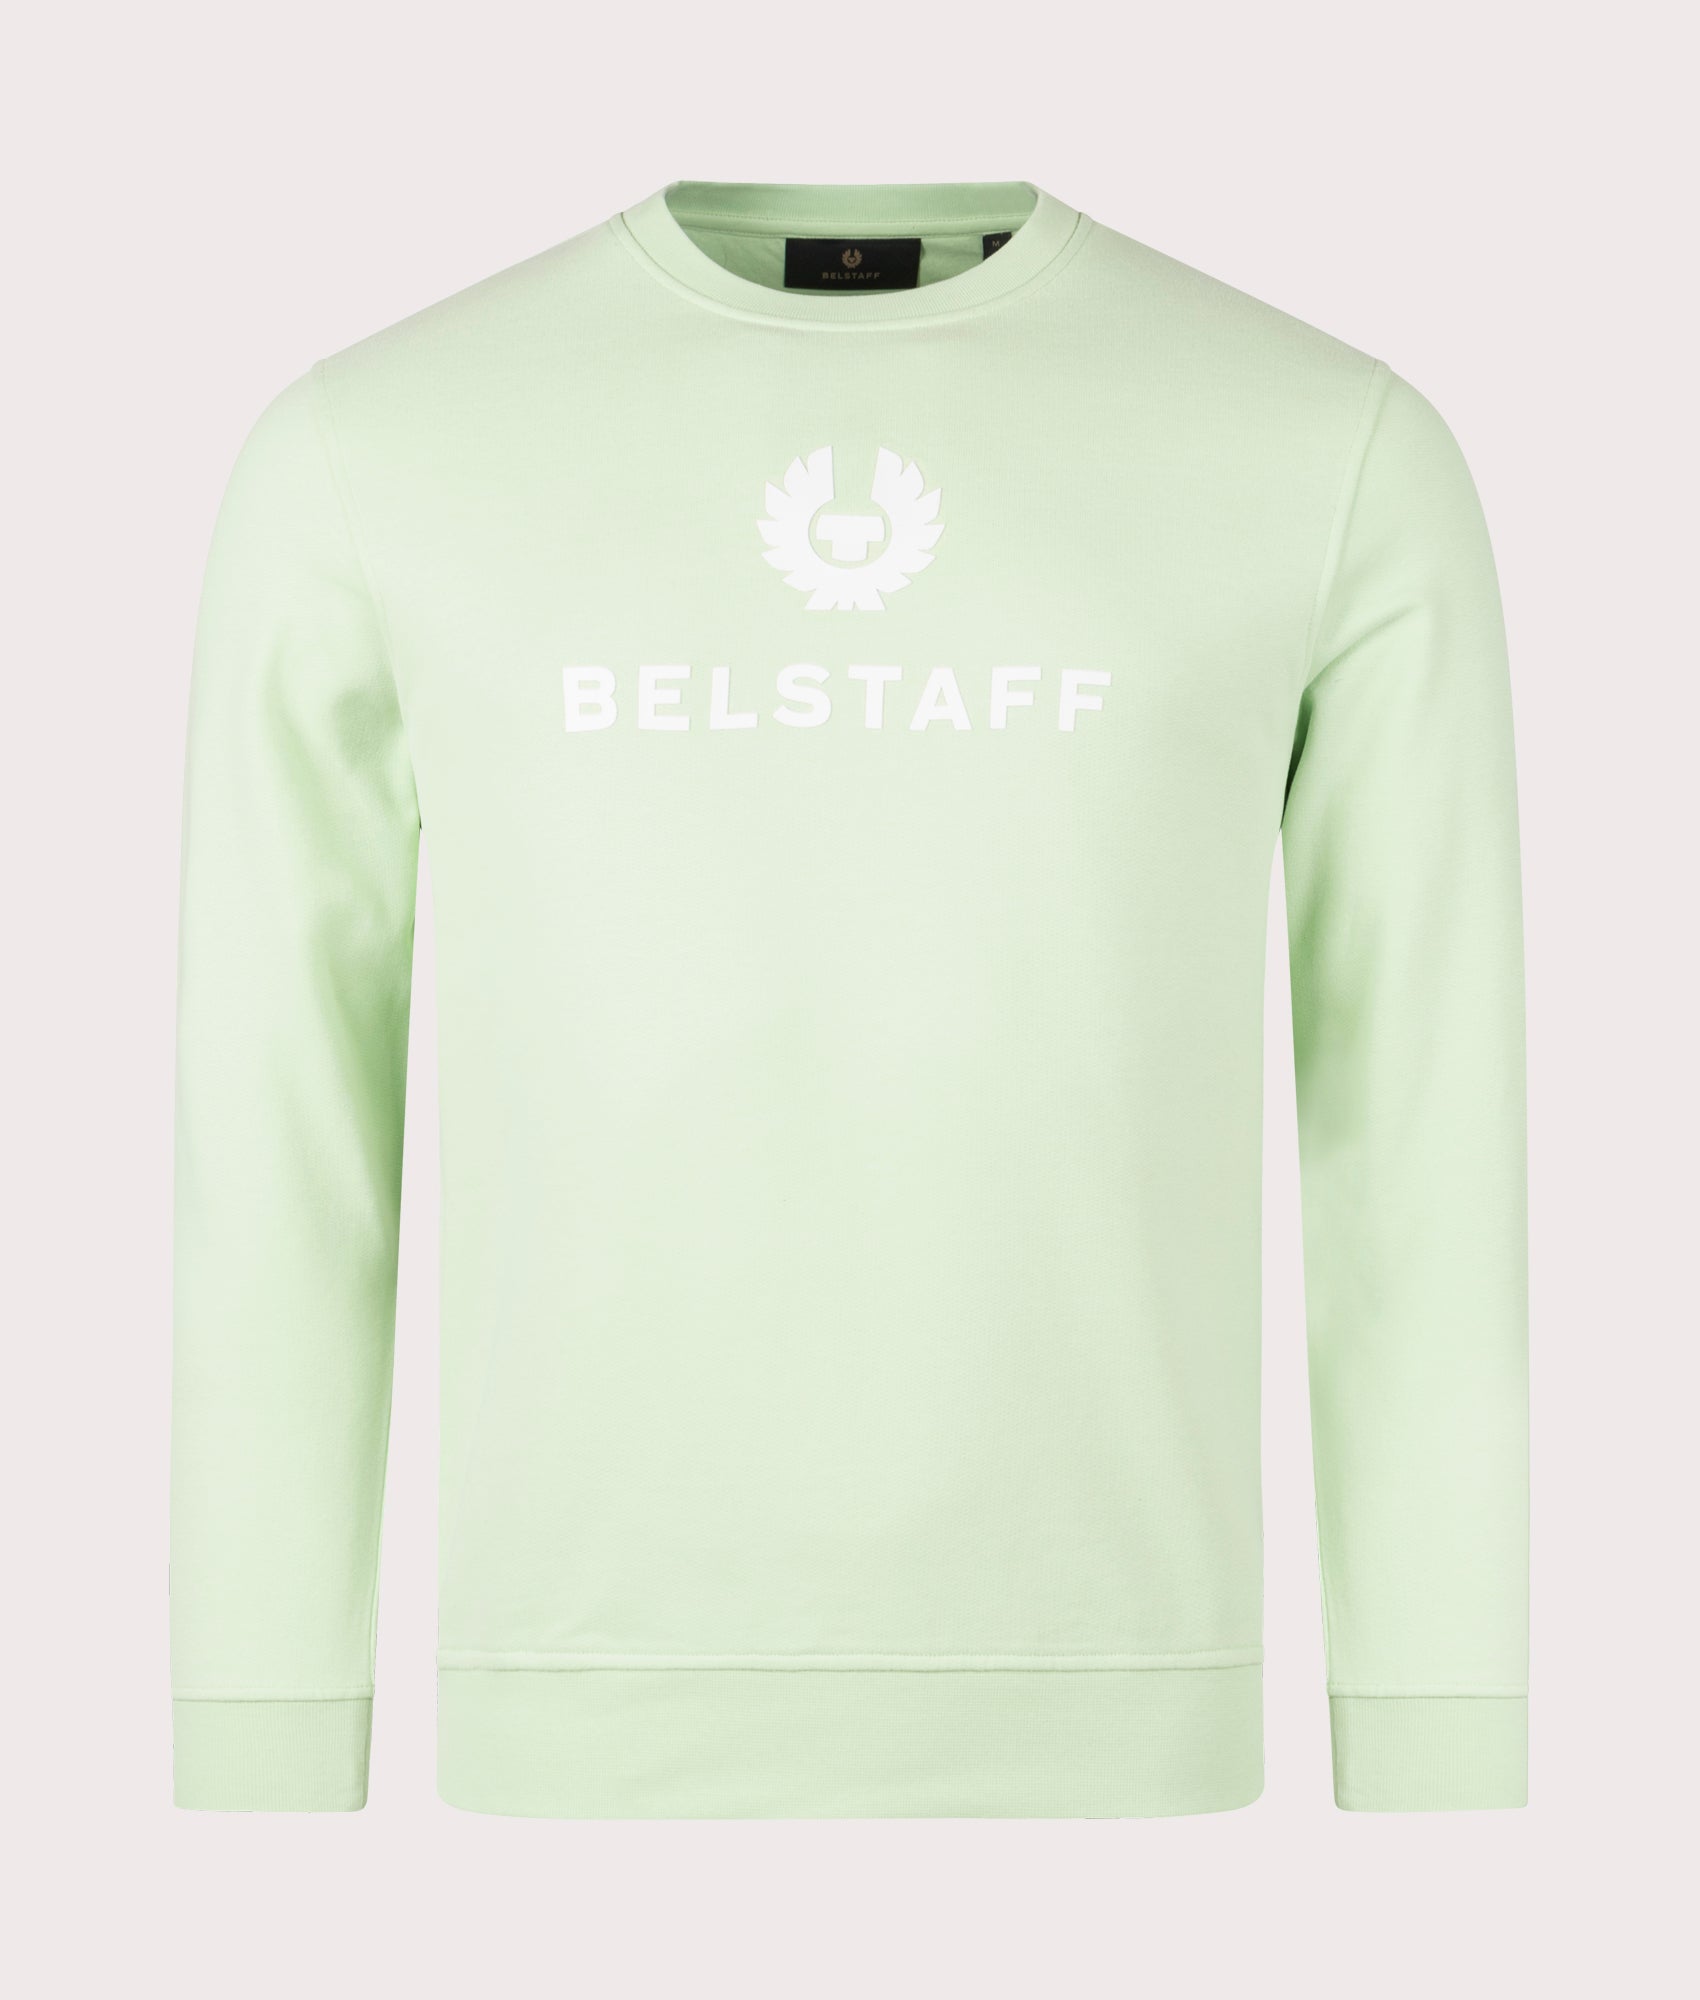 Belstaff Mens Belstaff Signature Crewneck Sweatshirt - Colour: New Leaf Green - Size: Large